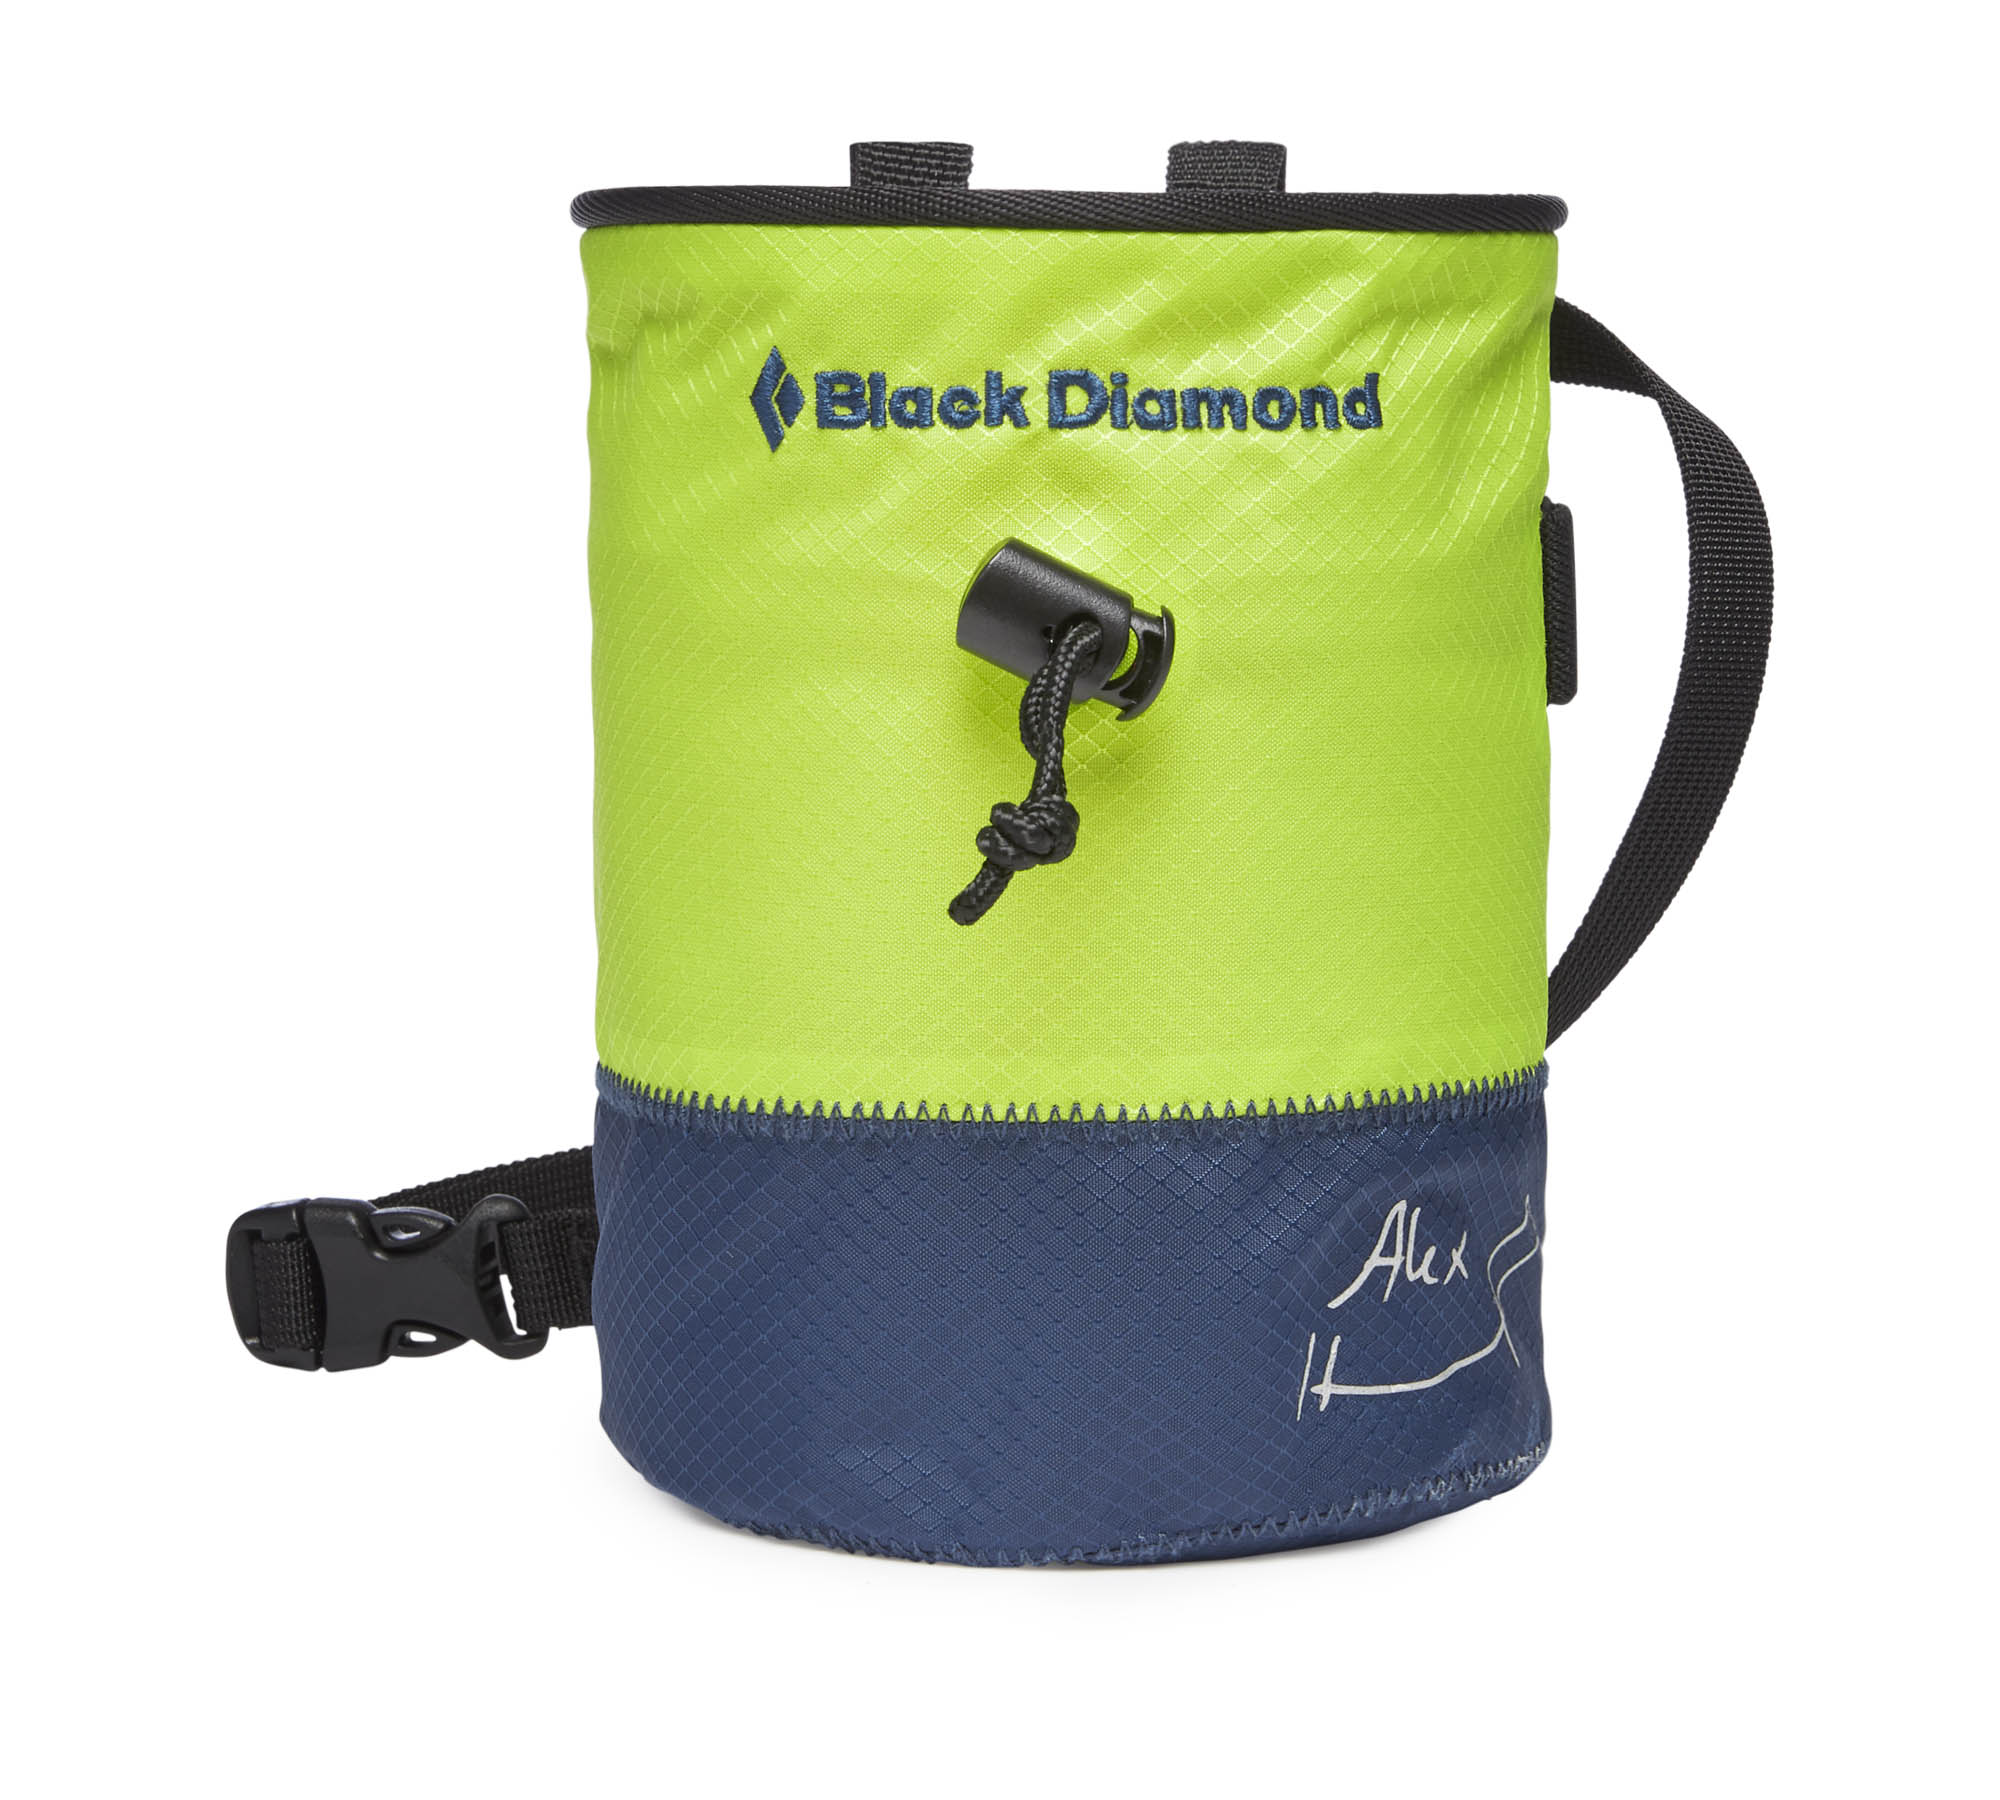 Black Diamond Freerider Chalk Bag - Sacchetto porta magnesite